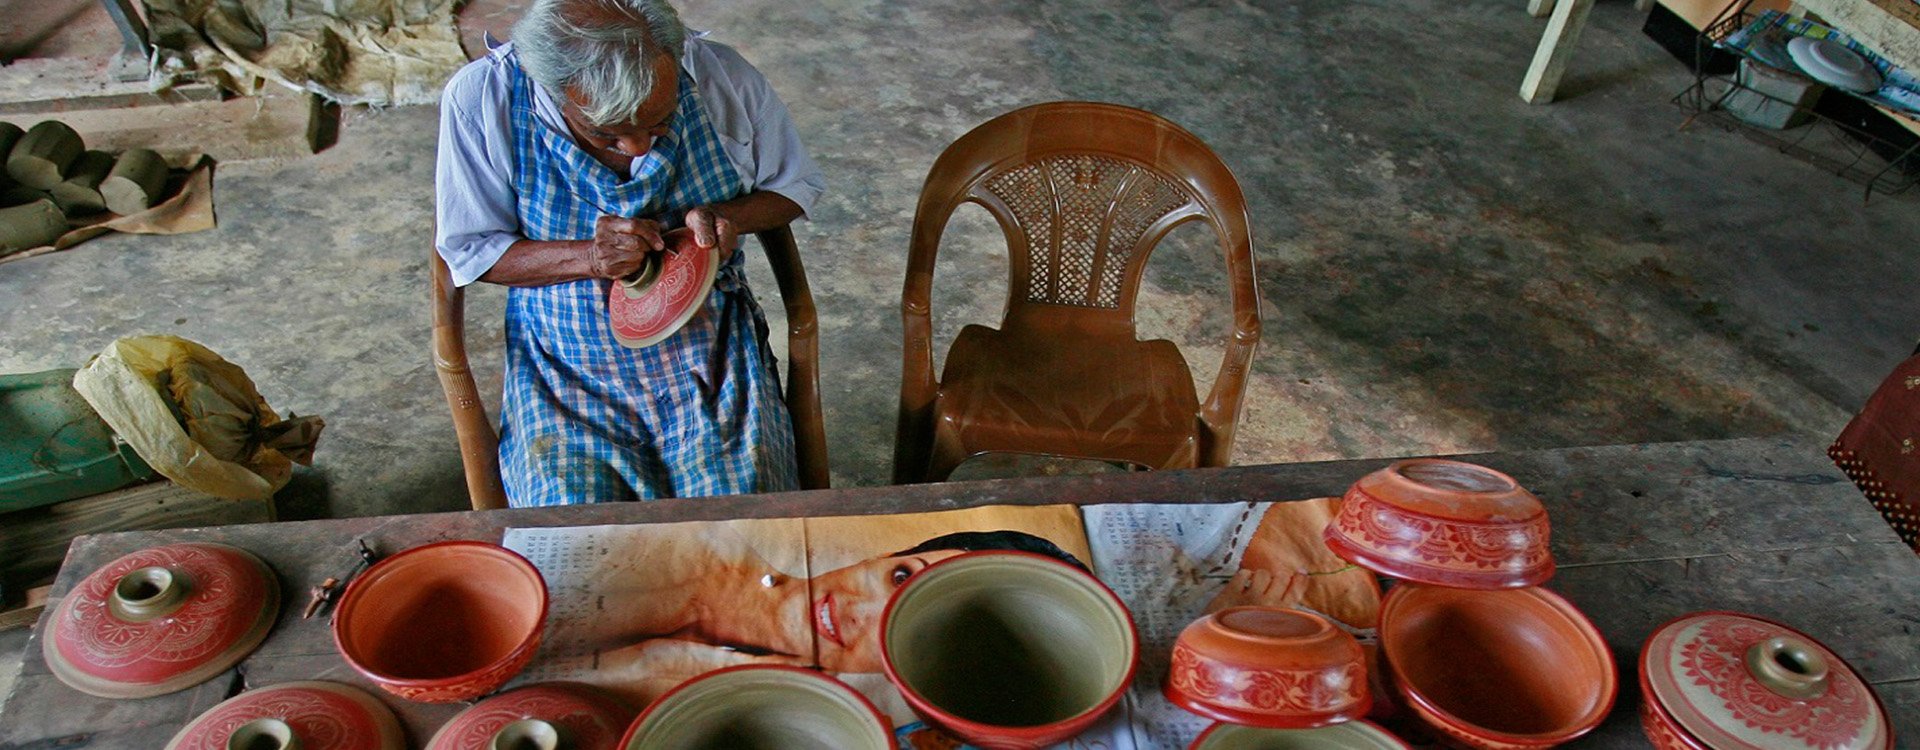 Sri Lanka_Colombo_Pottery Wheel_iStock_000028630714